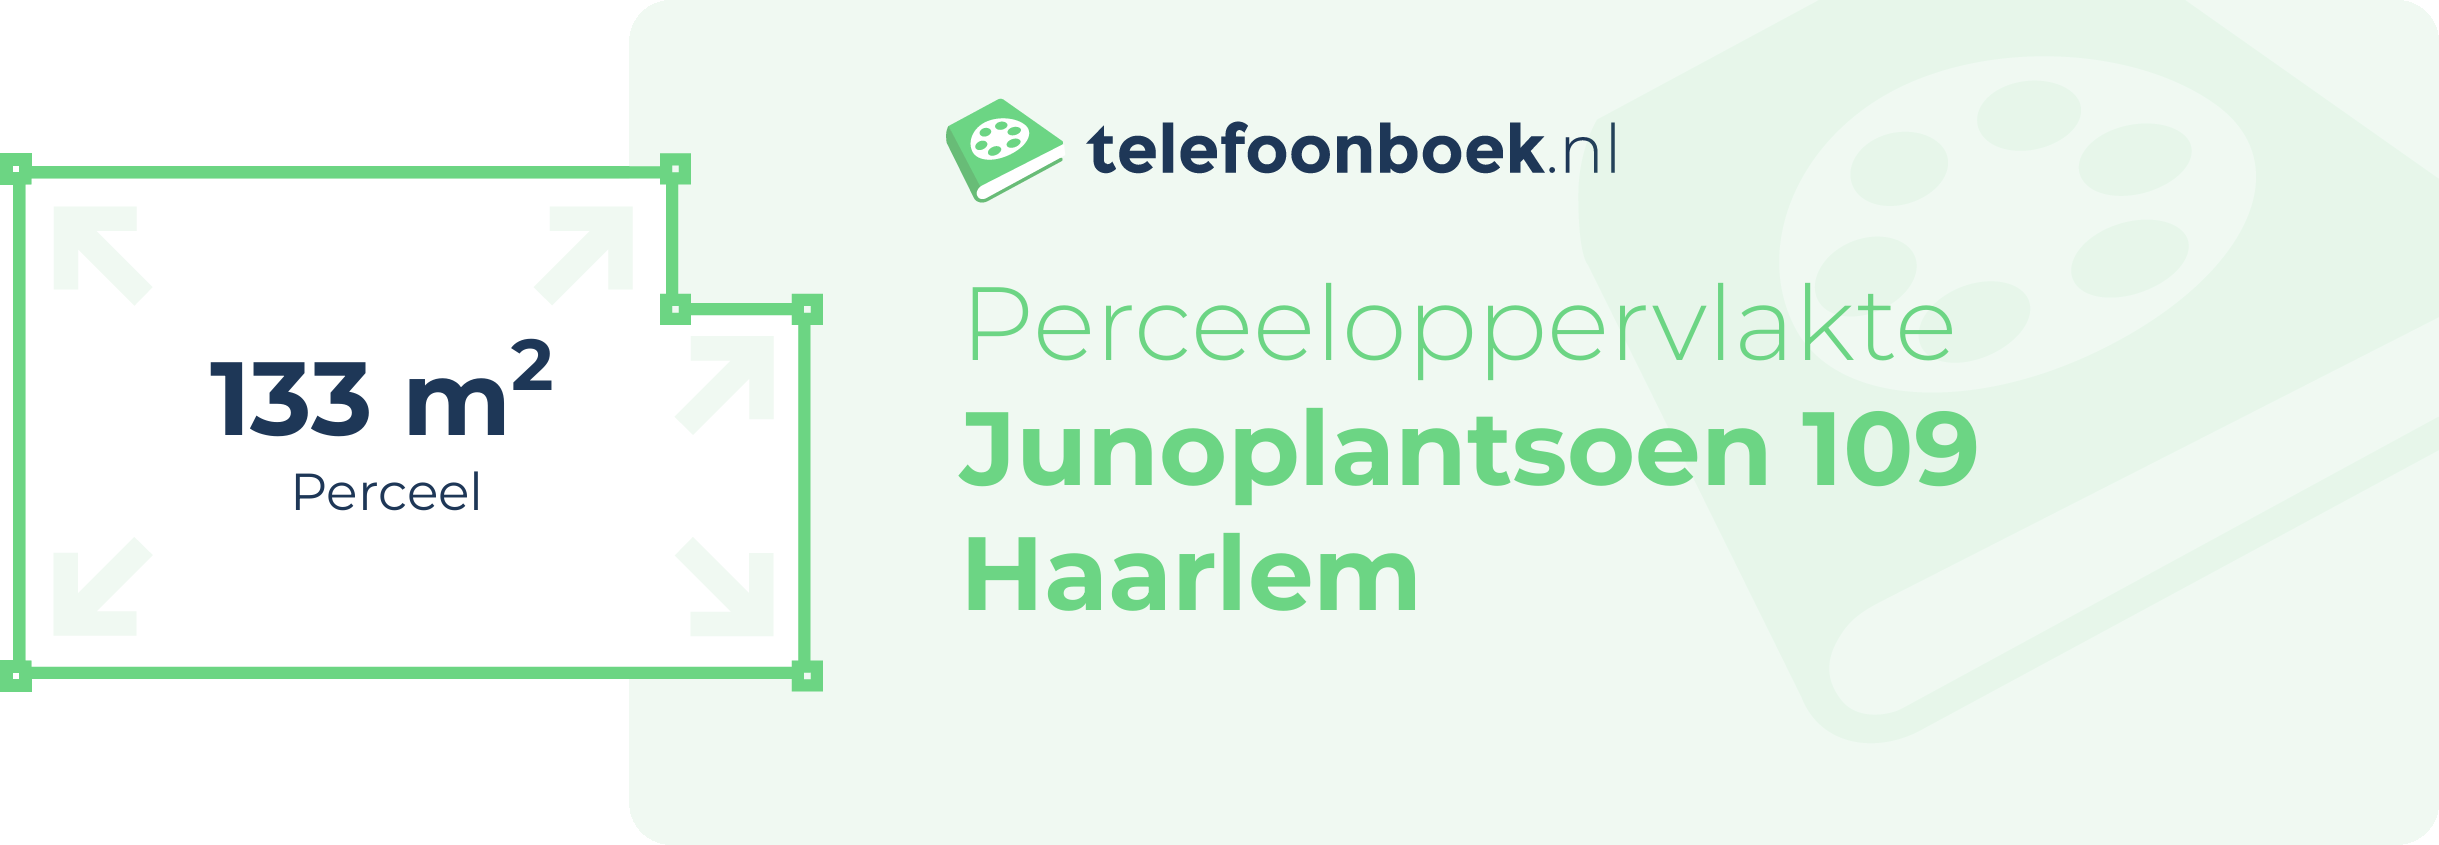 Perceeloppervlakte Junoplantsoen 109 Haarlem